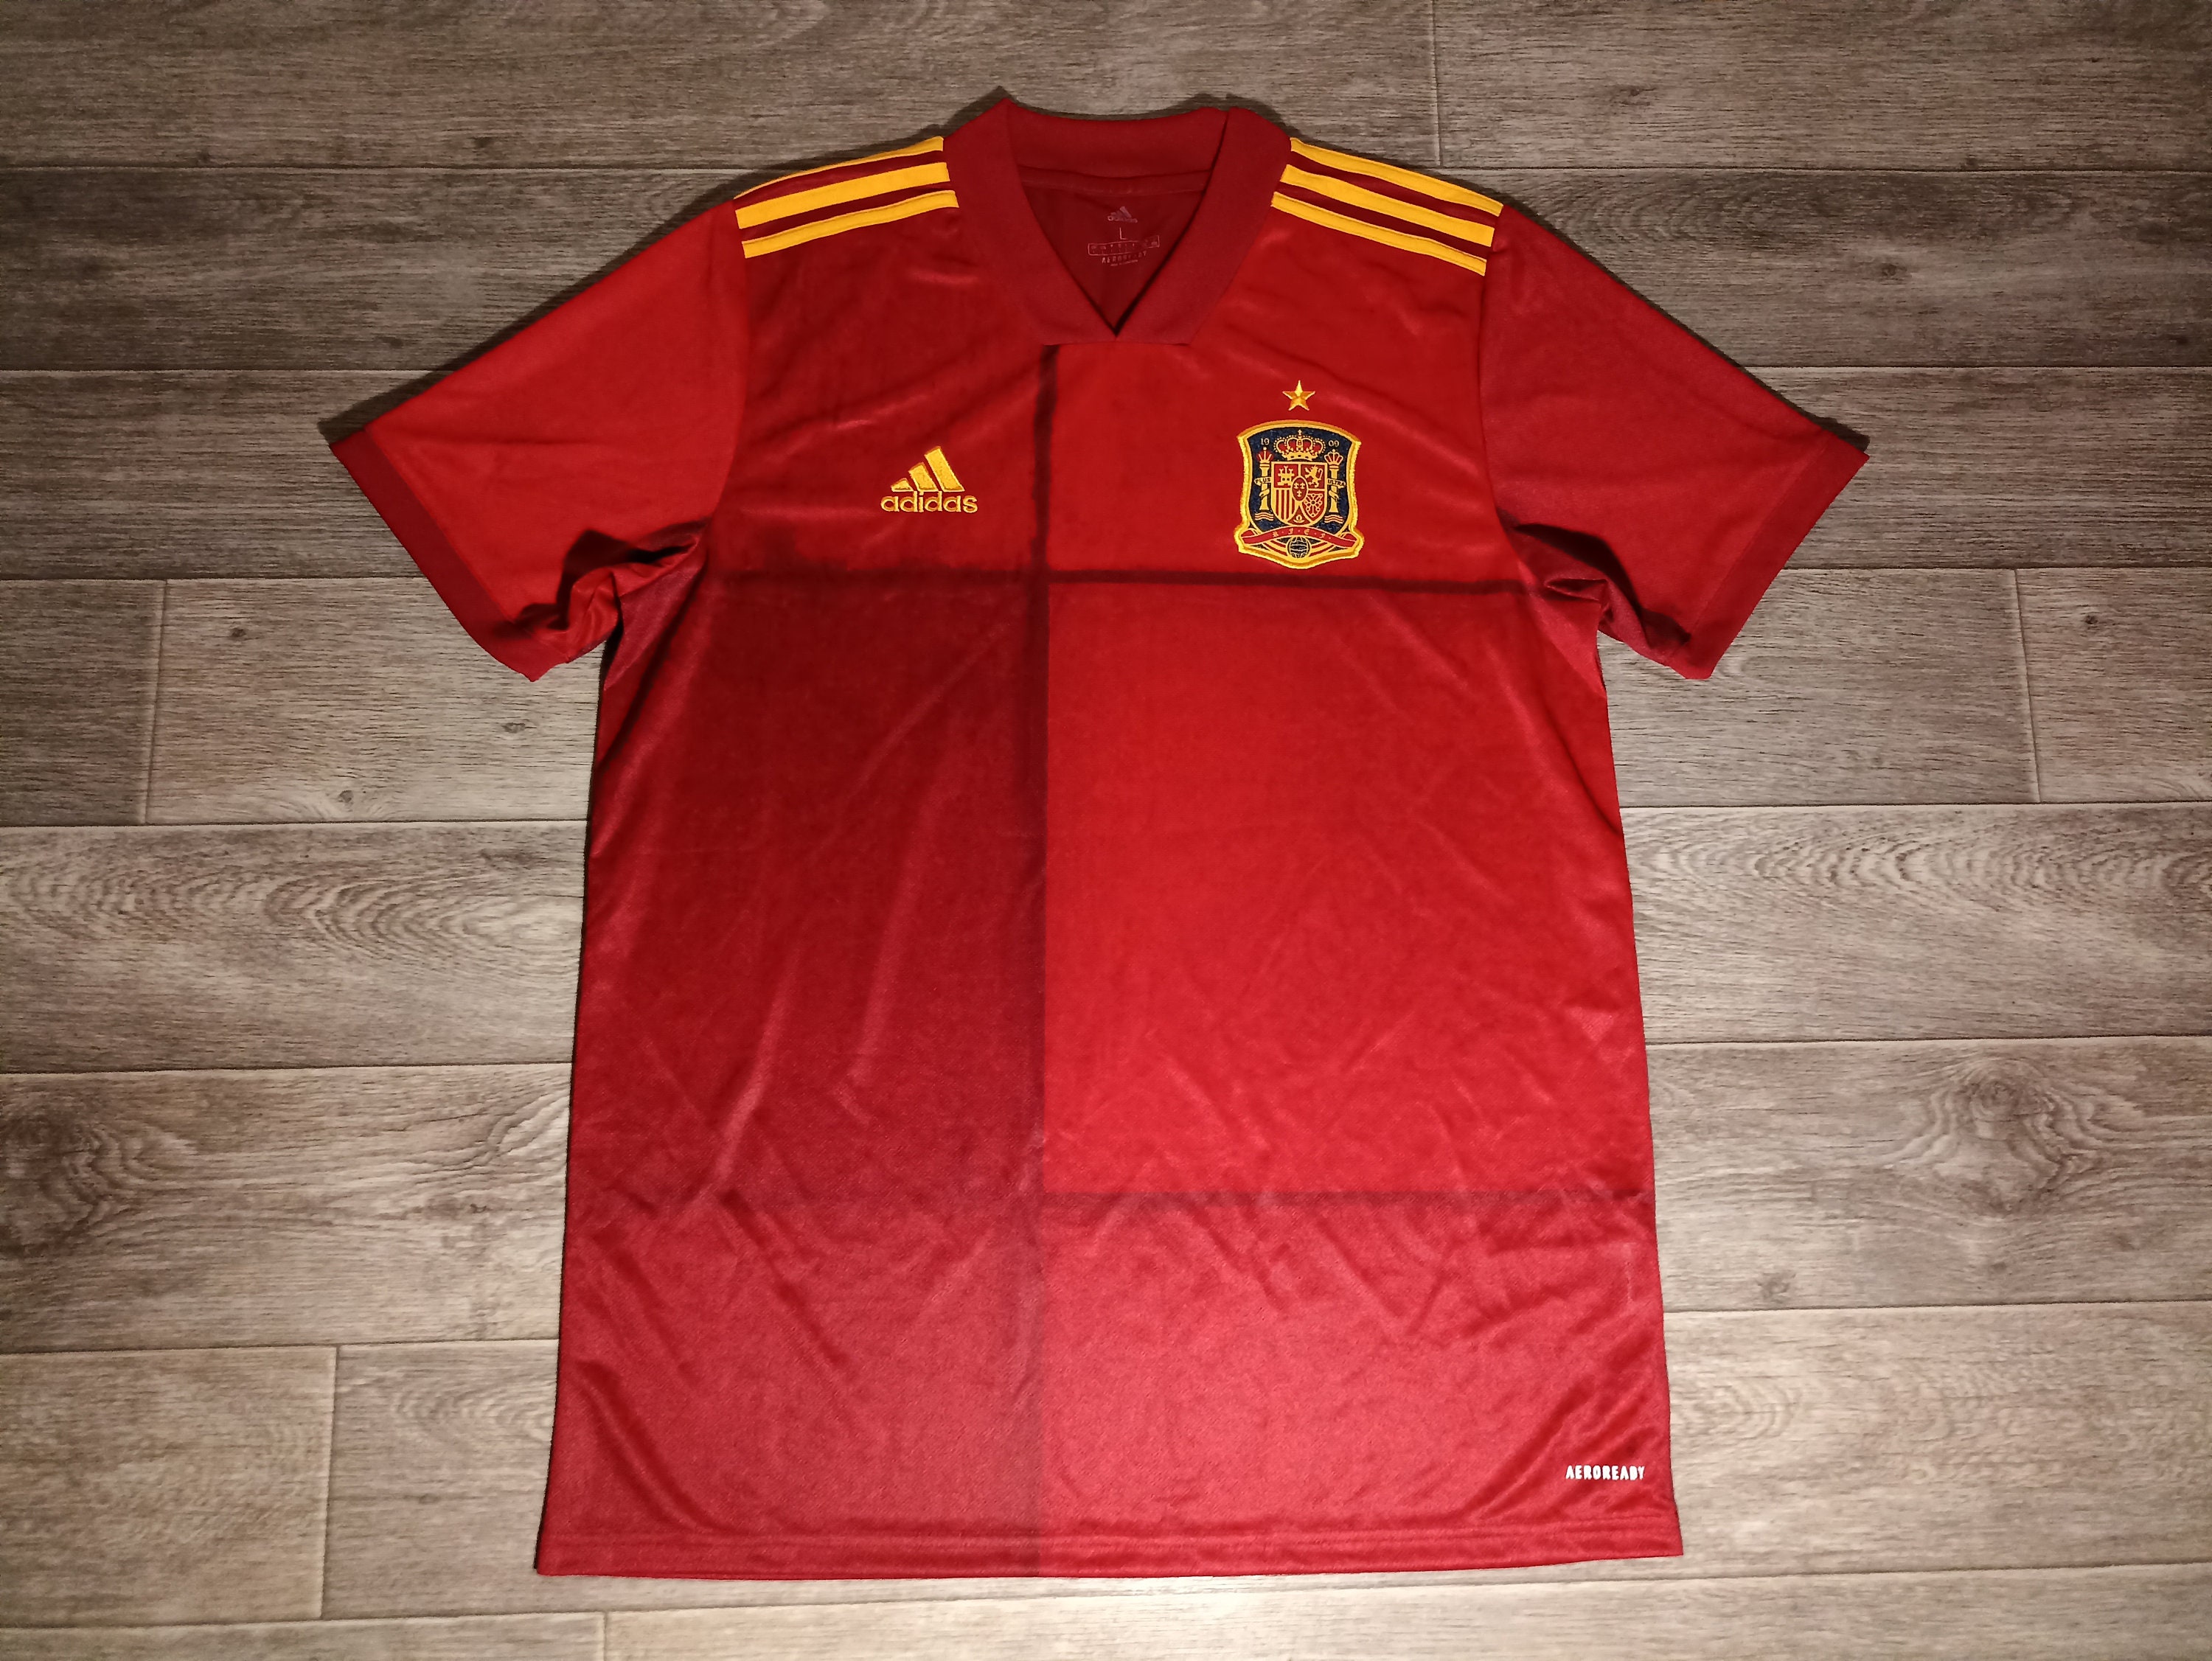 Spain national team jersey